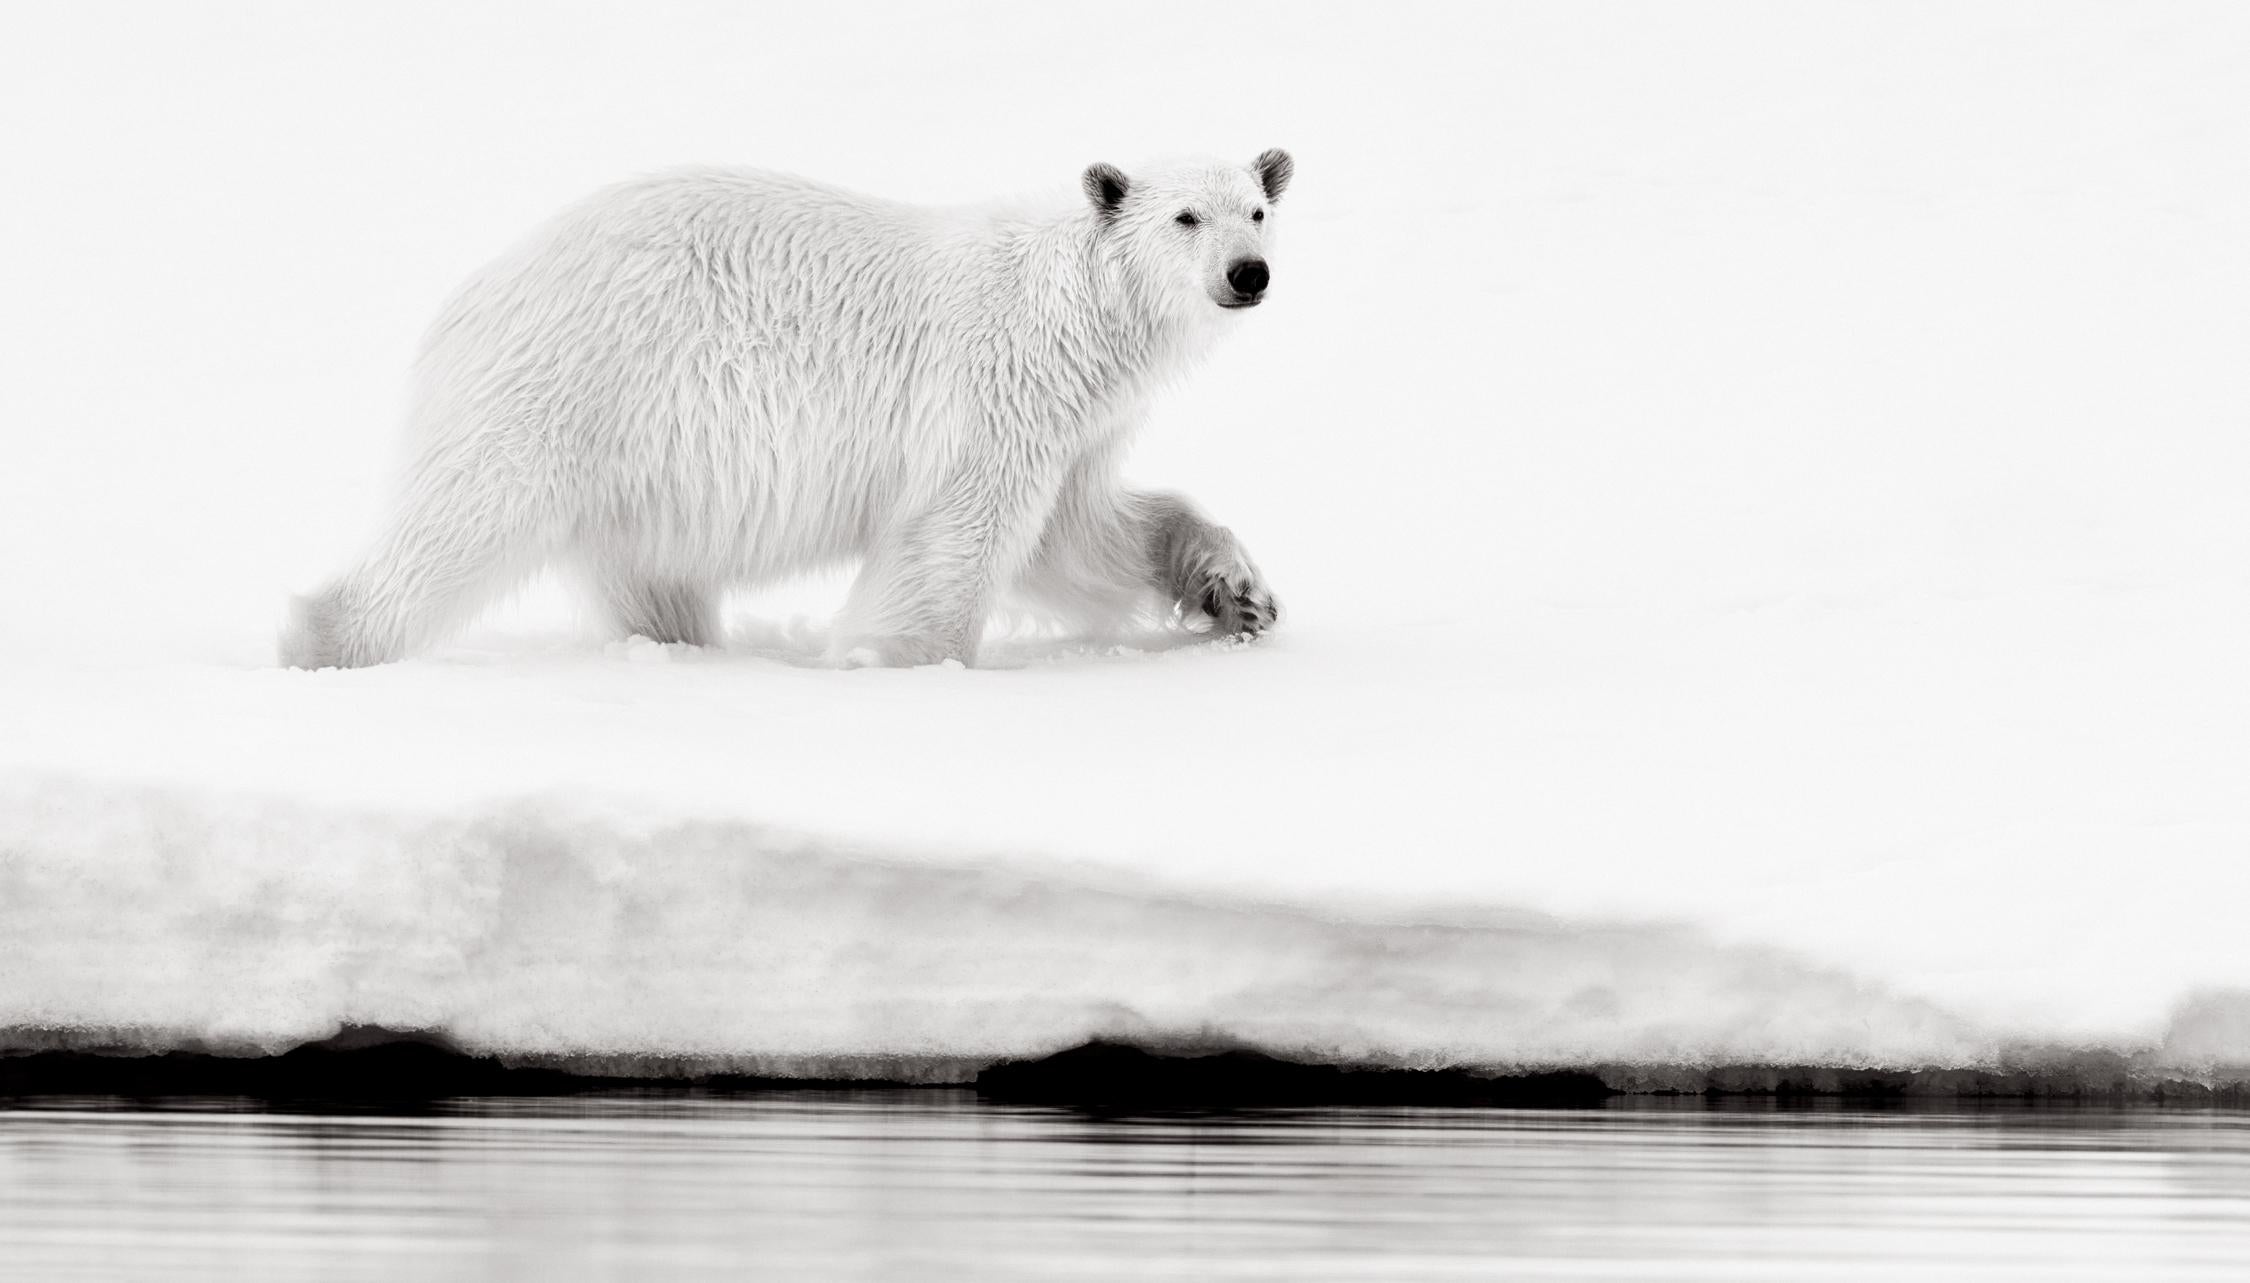 Drew Doggett Black and White Photograph - Polar Bear Walking Near Water's Edge, Black & White Photography